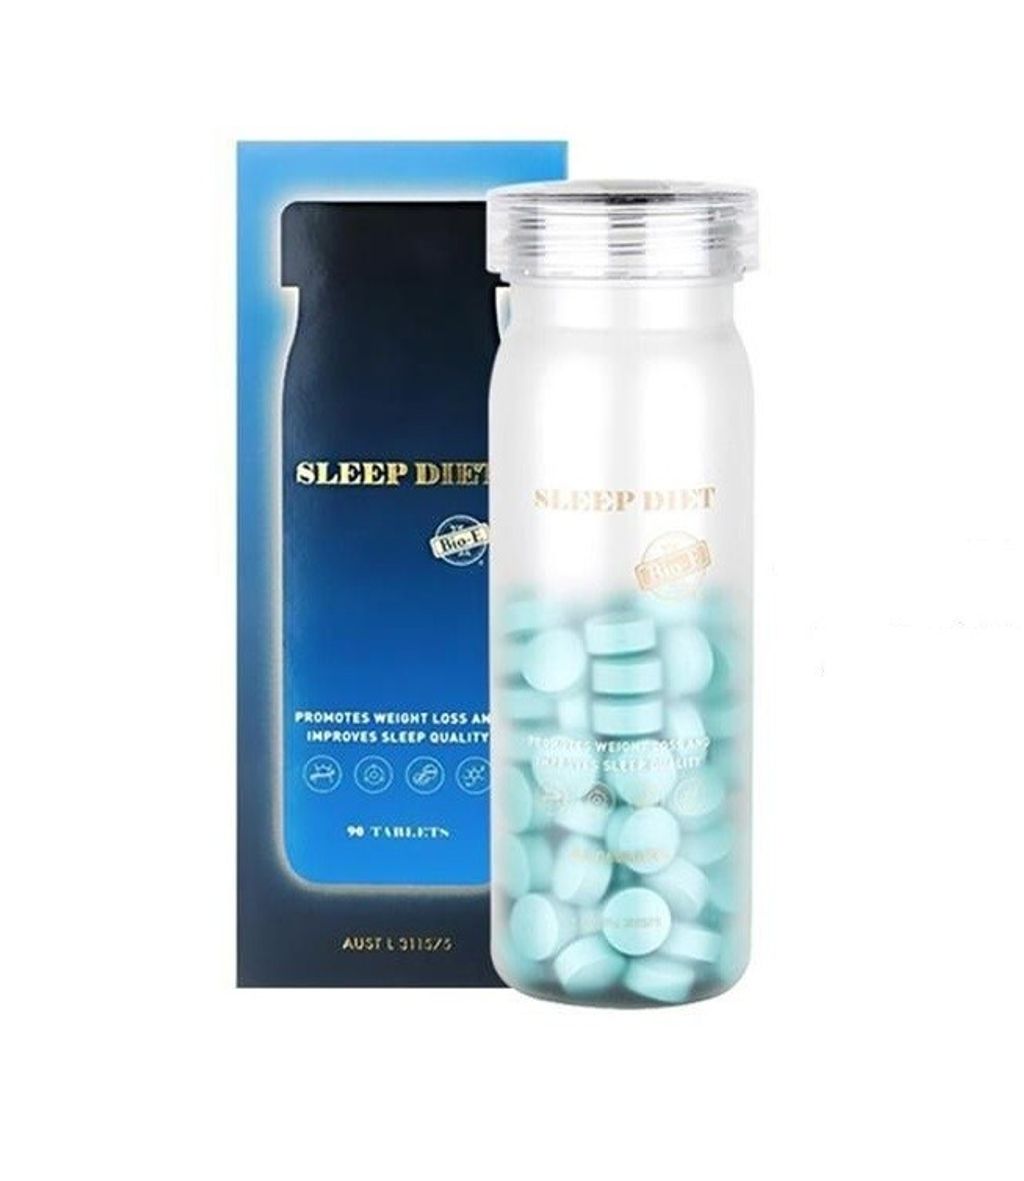 bio_e-sleep_diet_90_tablets2.jpg